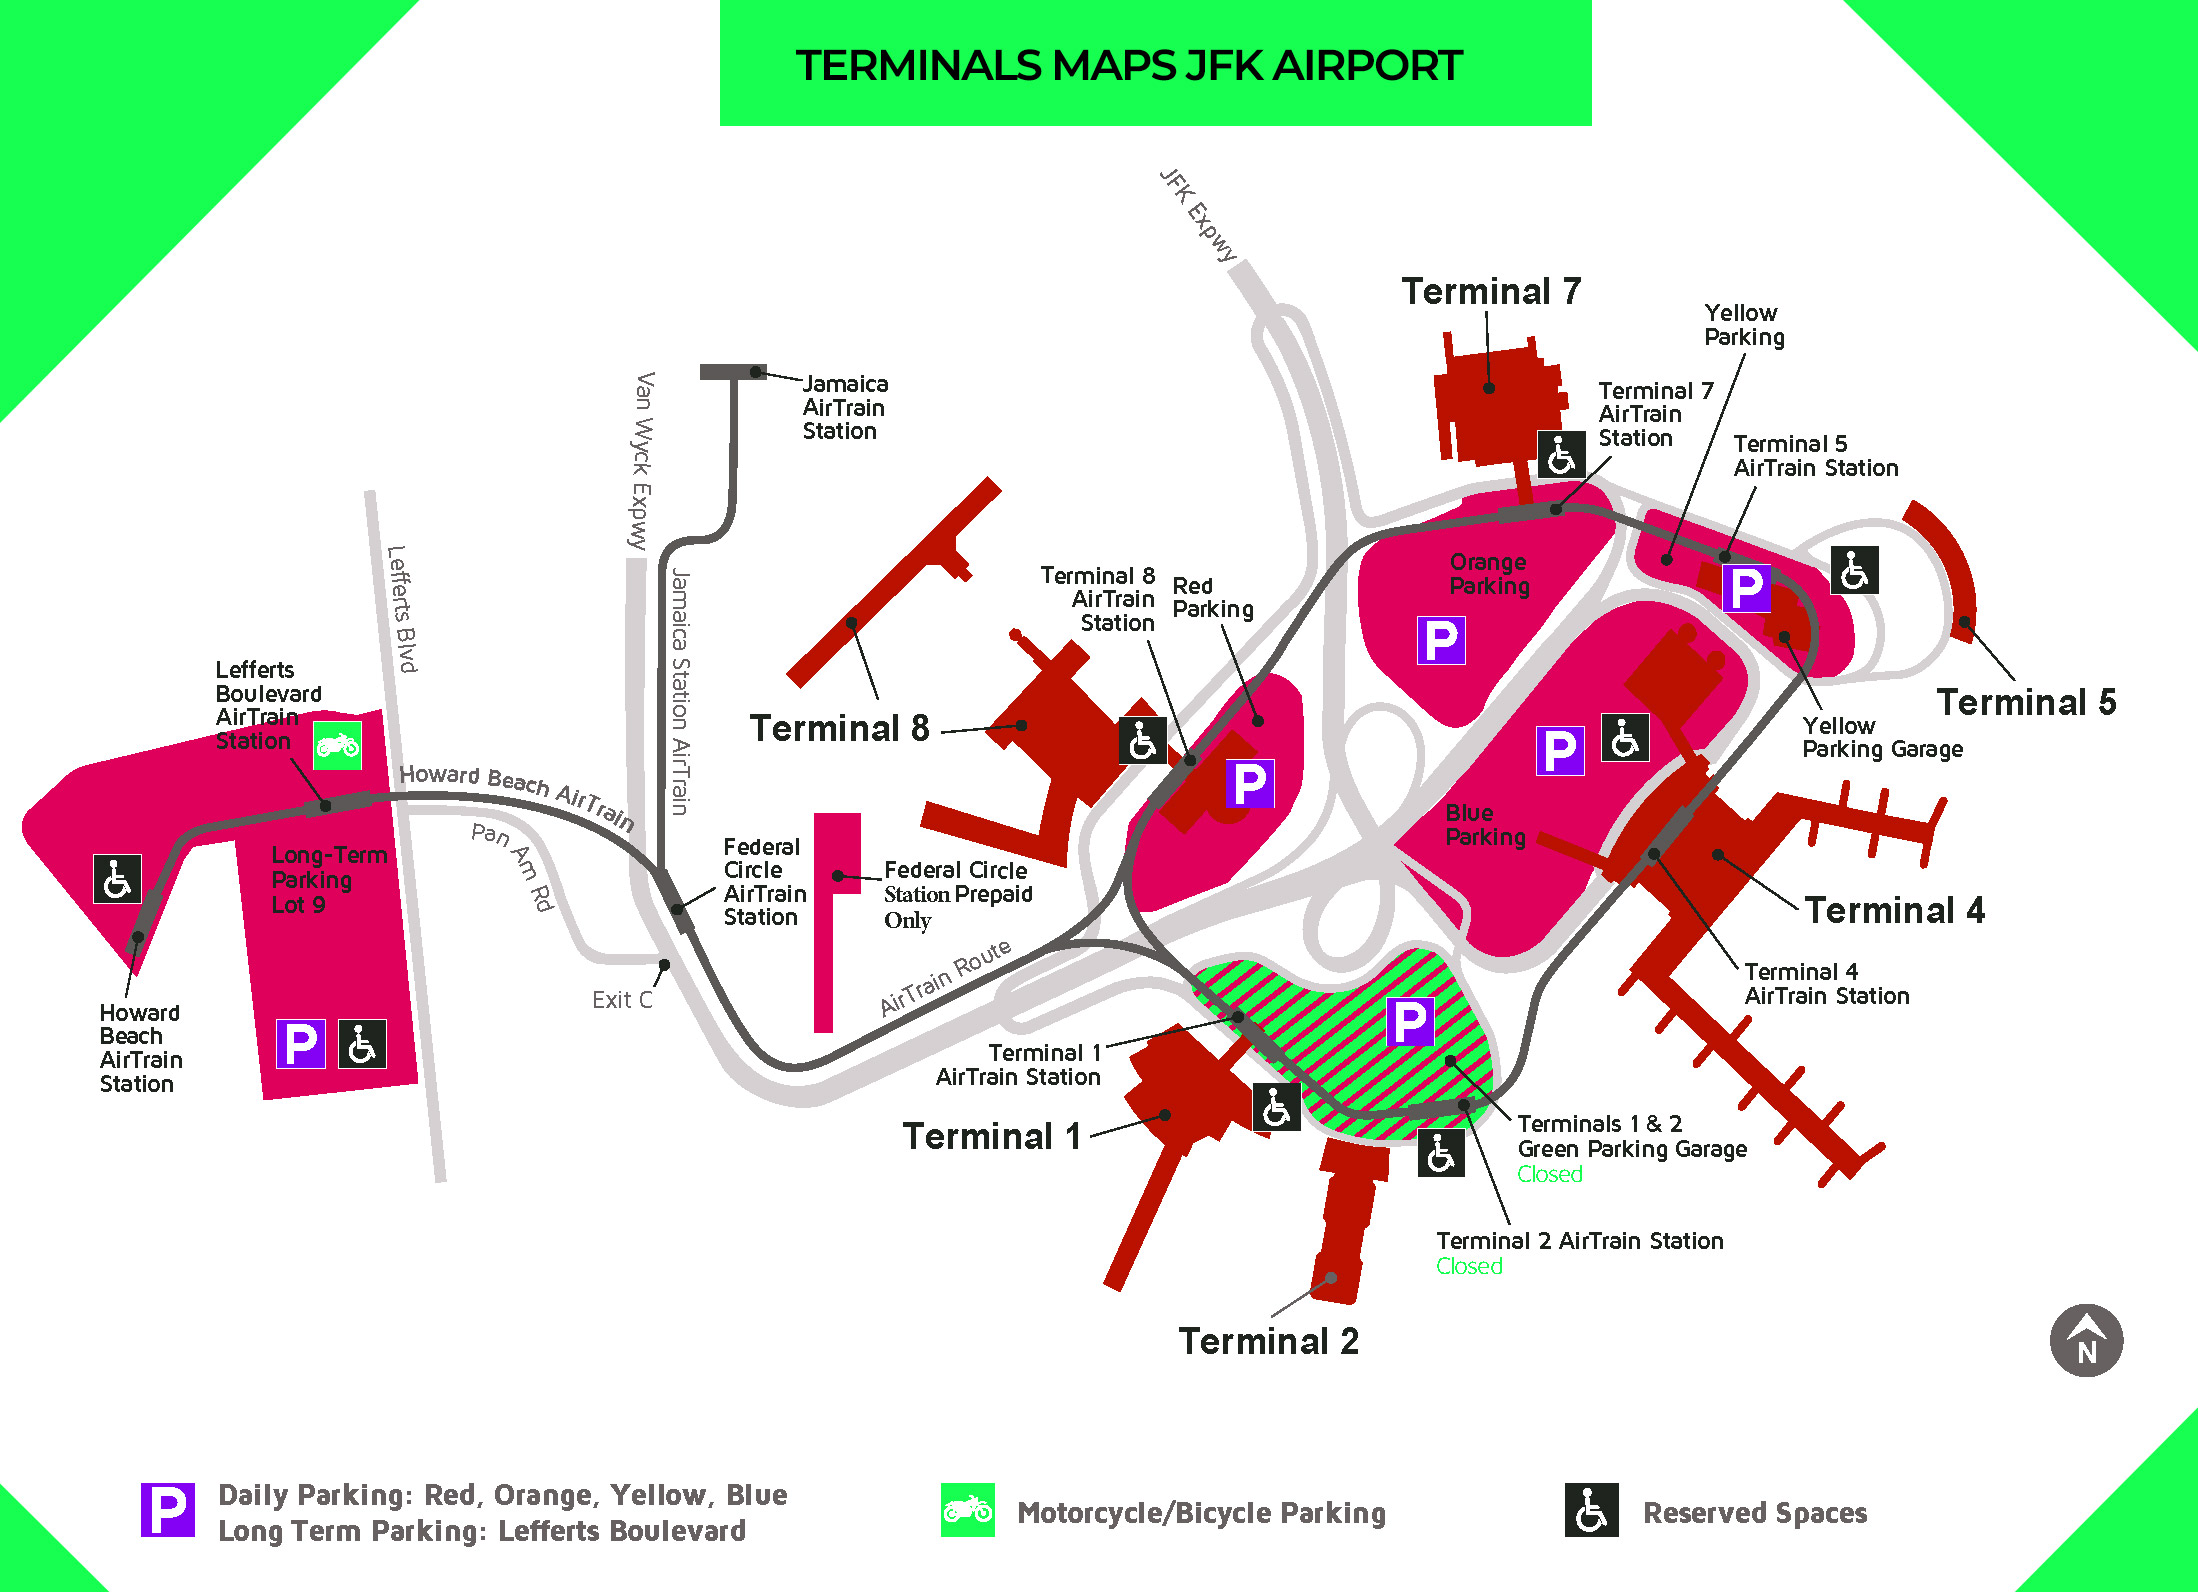 Terminals maps JFK Airport 